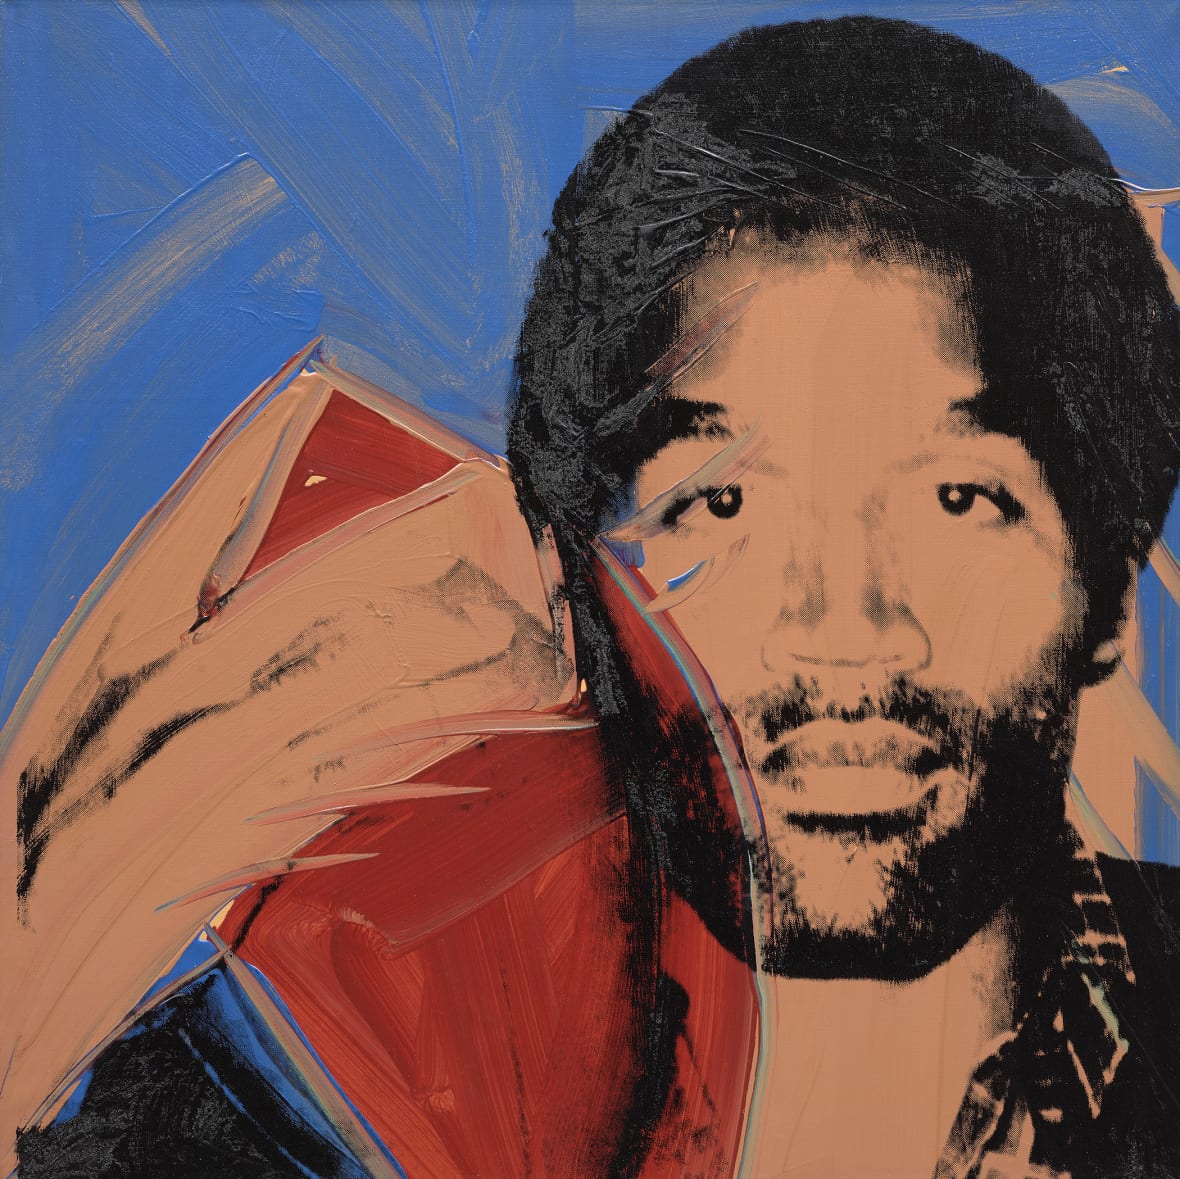 Andy Warhol portrait of OJ Simpson goes on auction block